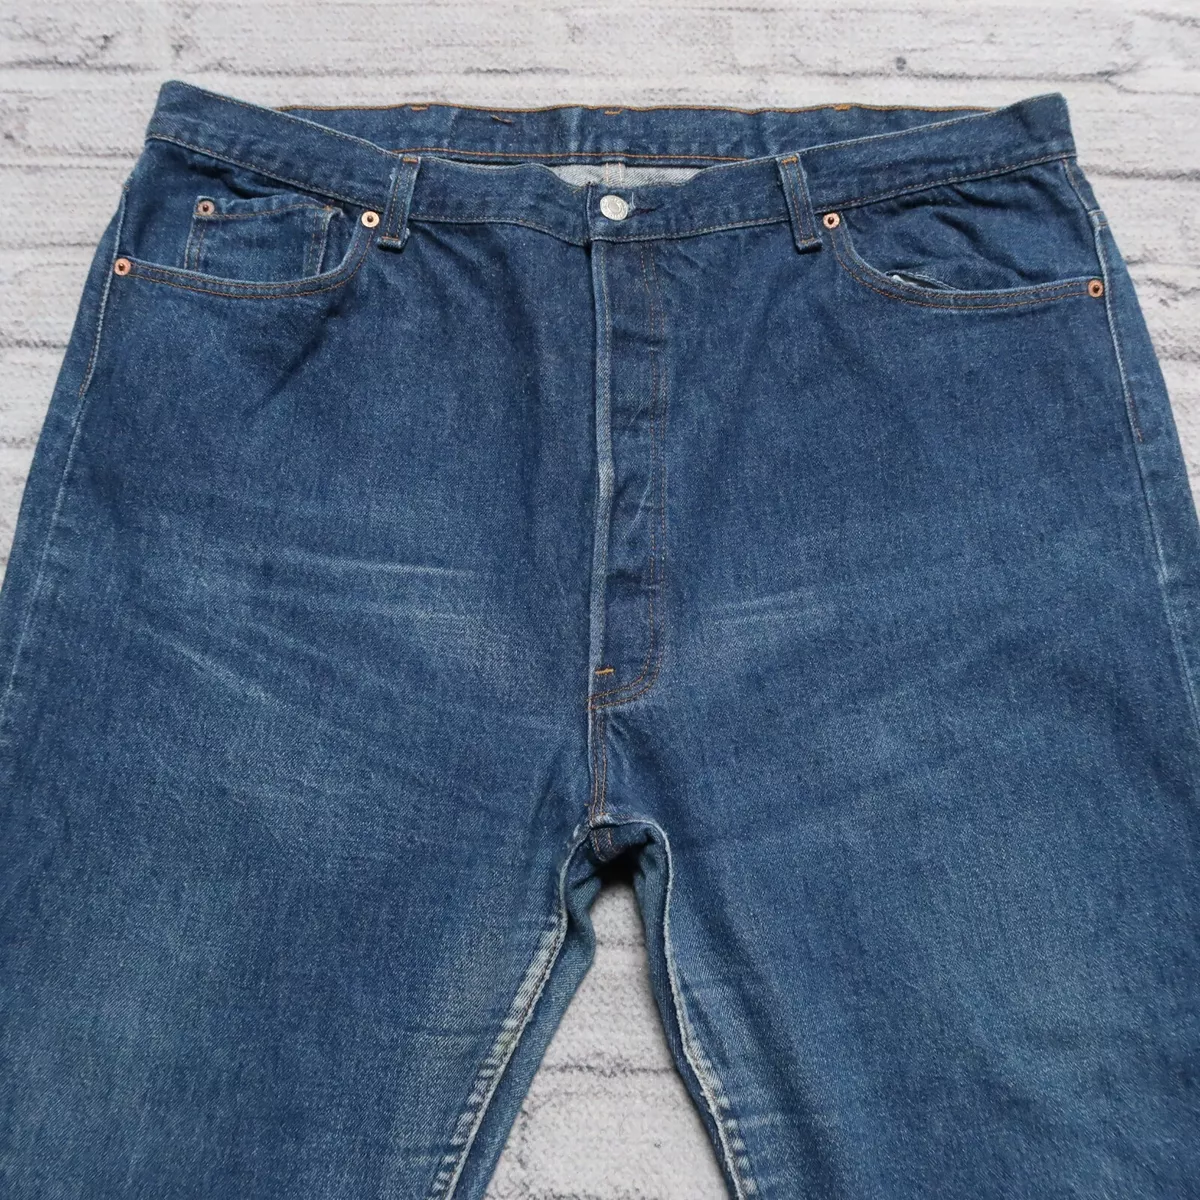 Vintage 90s Levis 501 Denim Jeans Made in USA Medium Wash